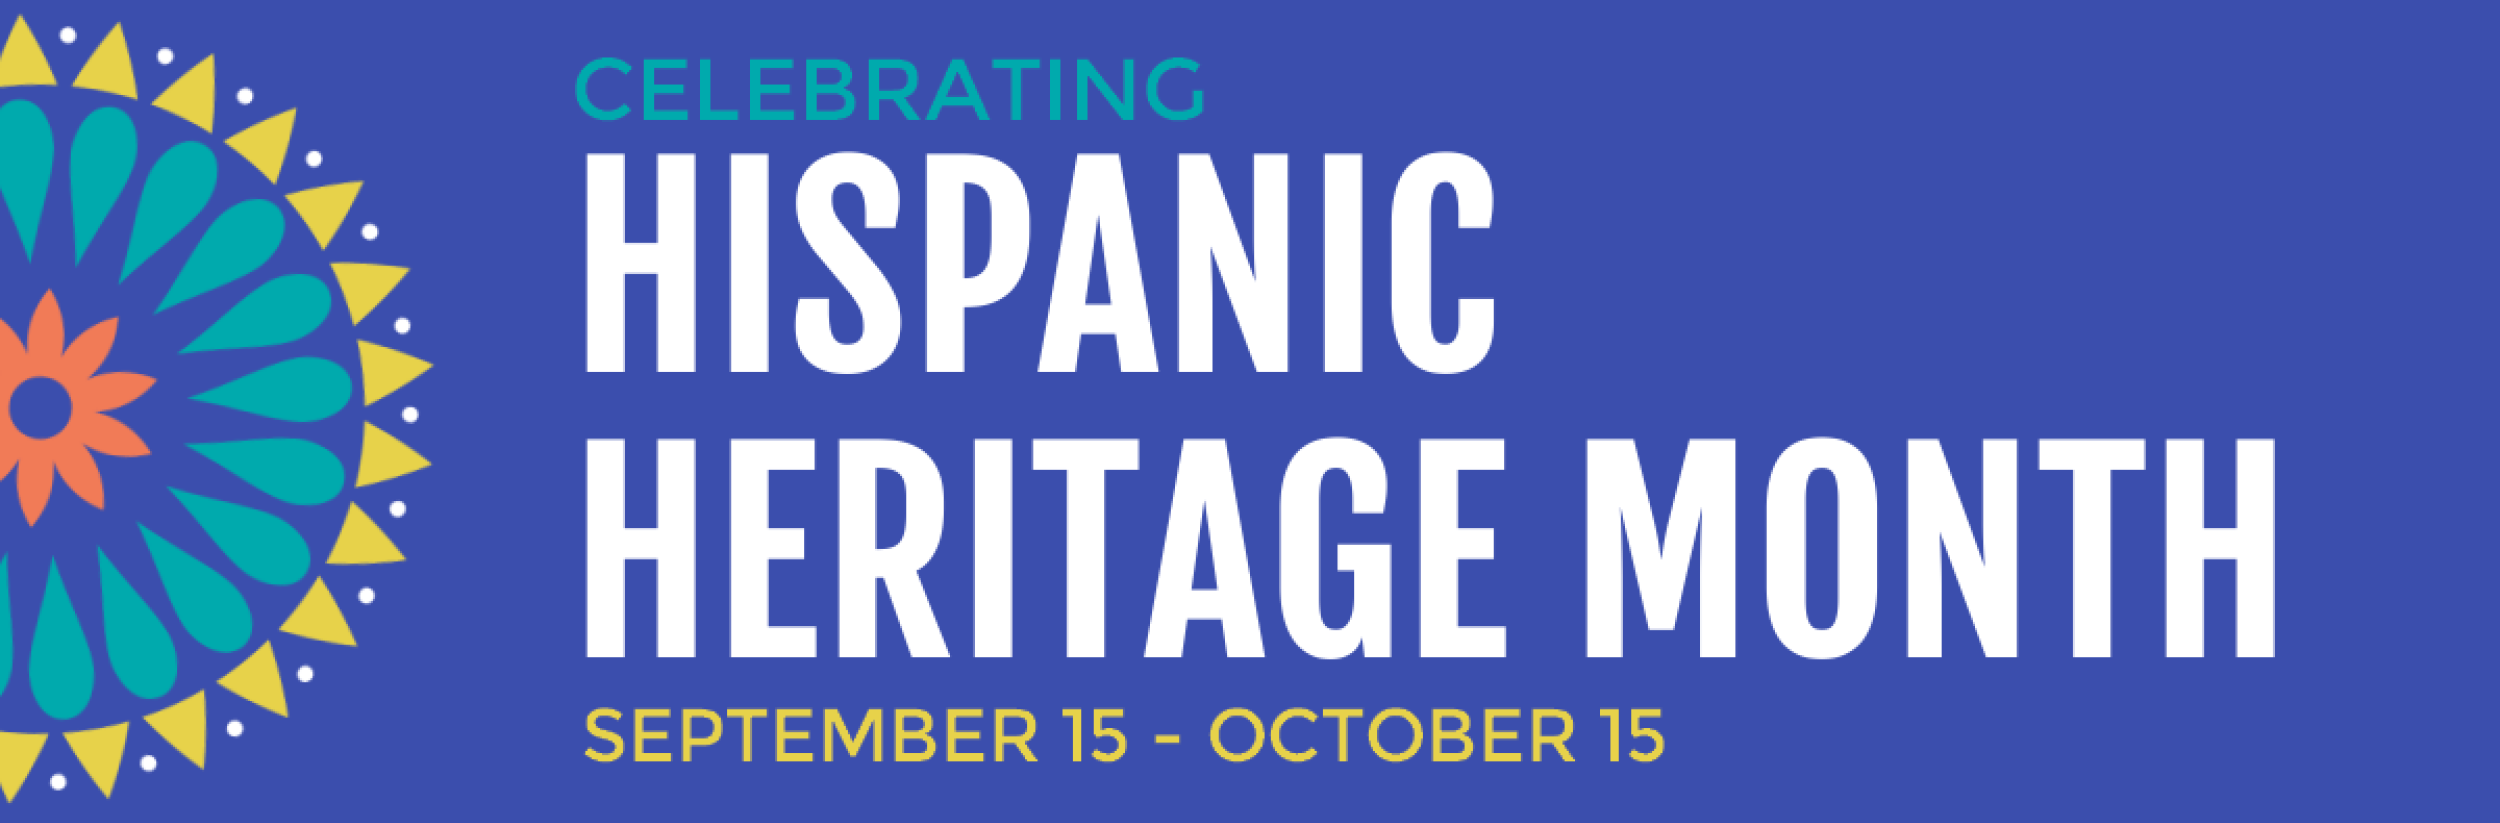 Image for "Hispanic Heritage Month"